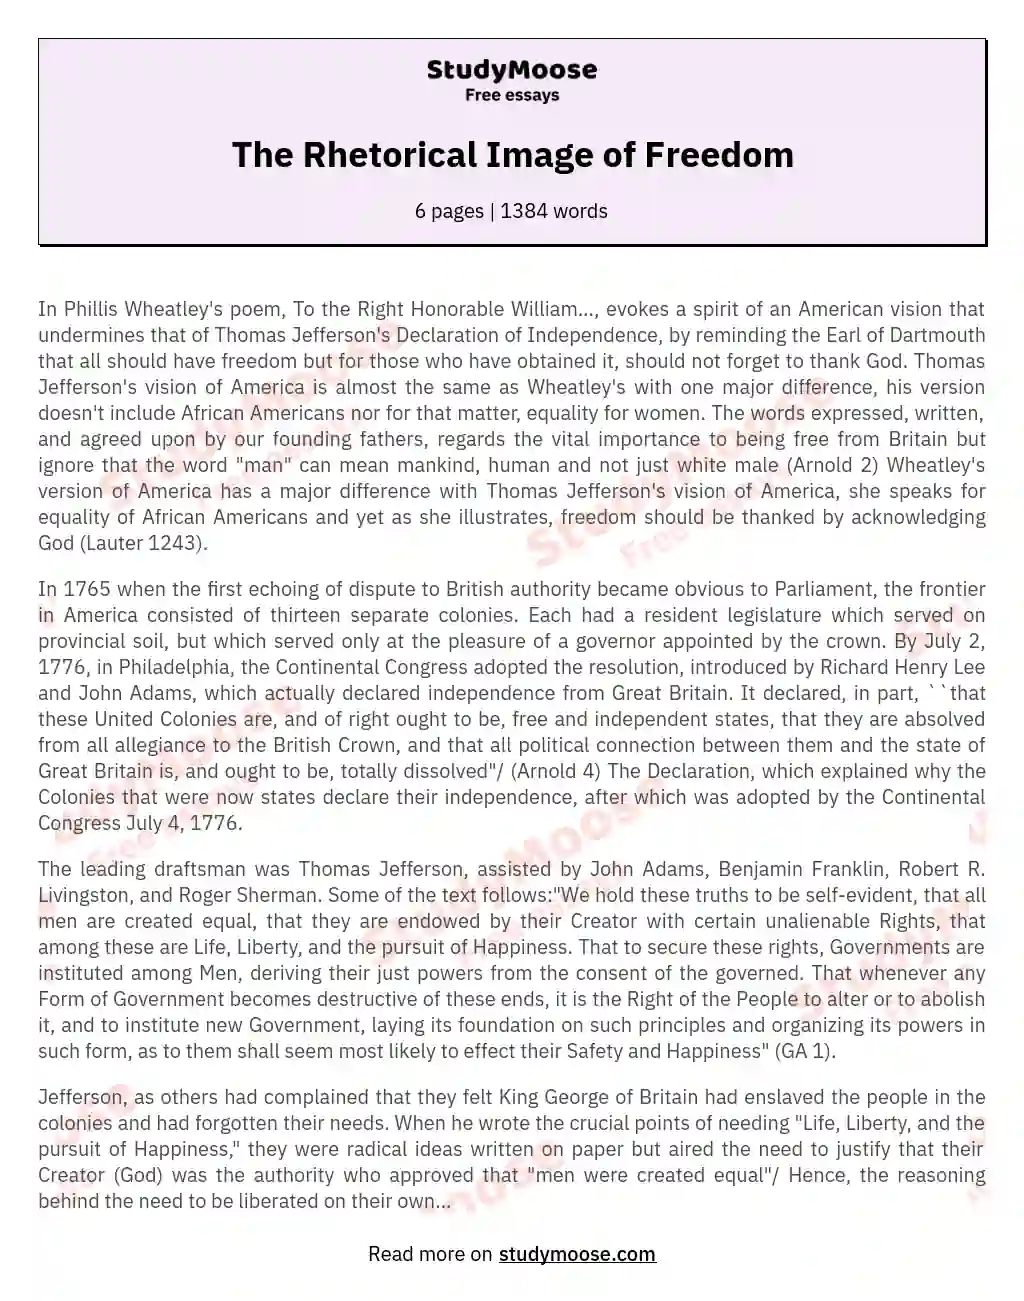 The Rhetorical Image of Freedom essay